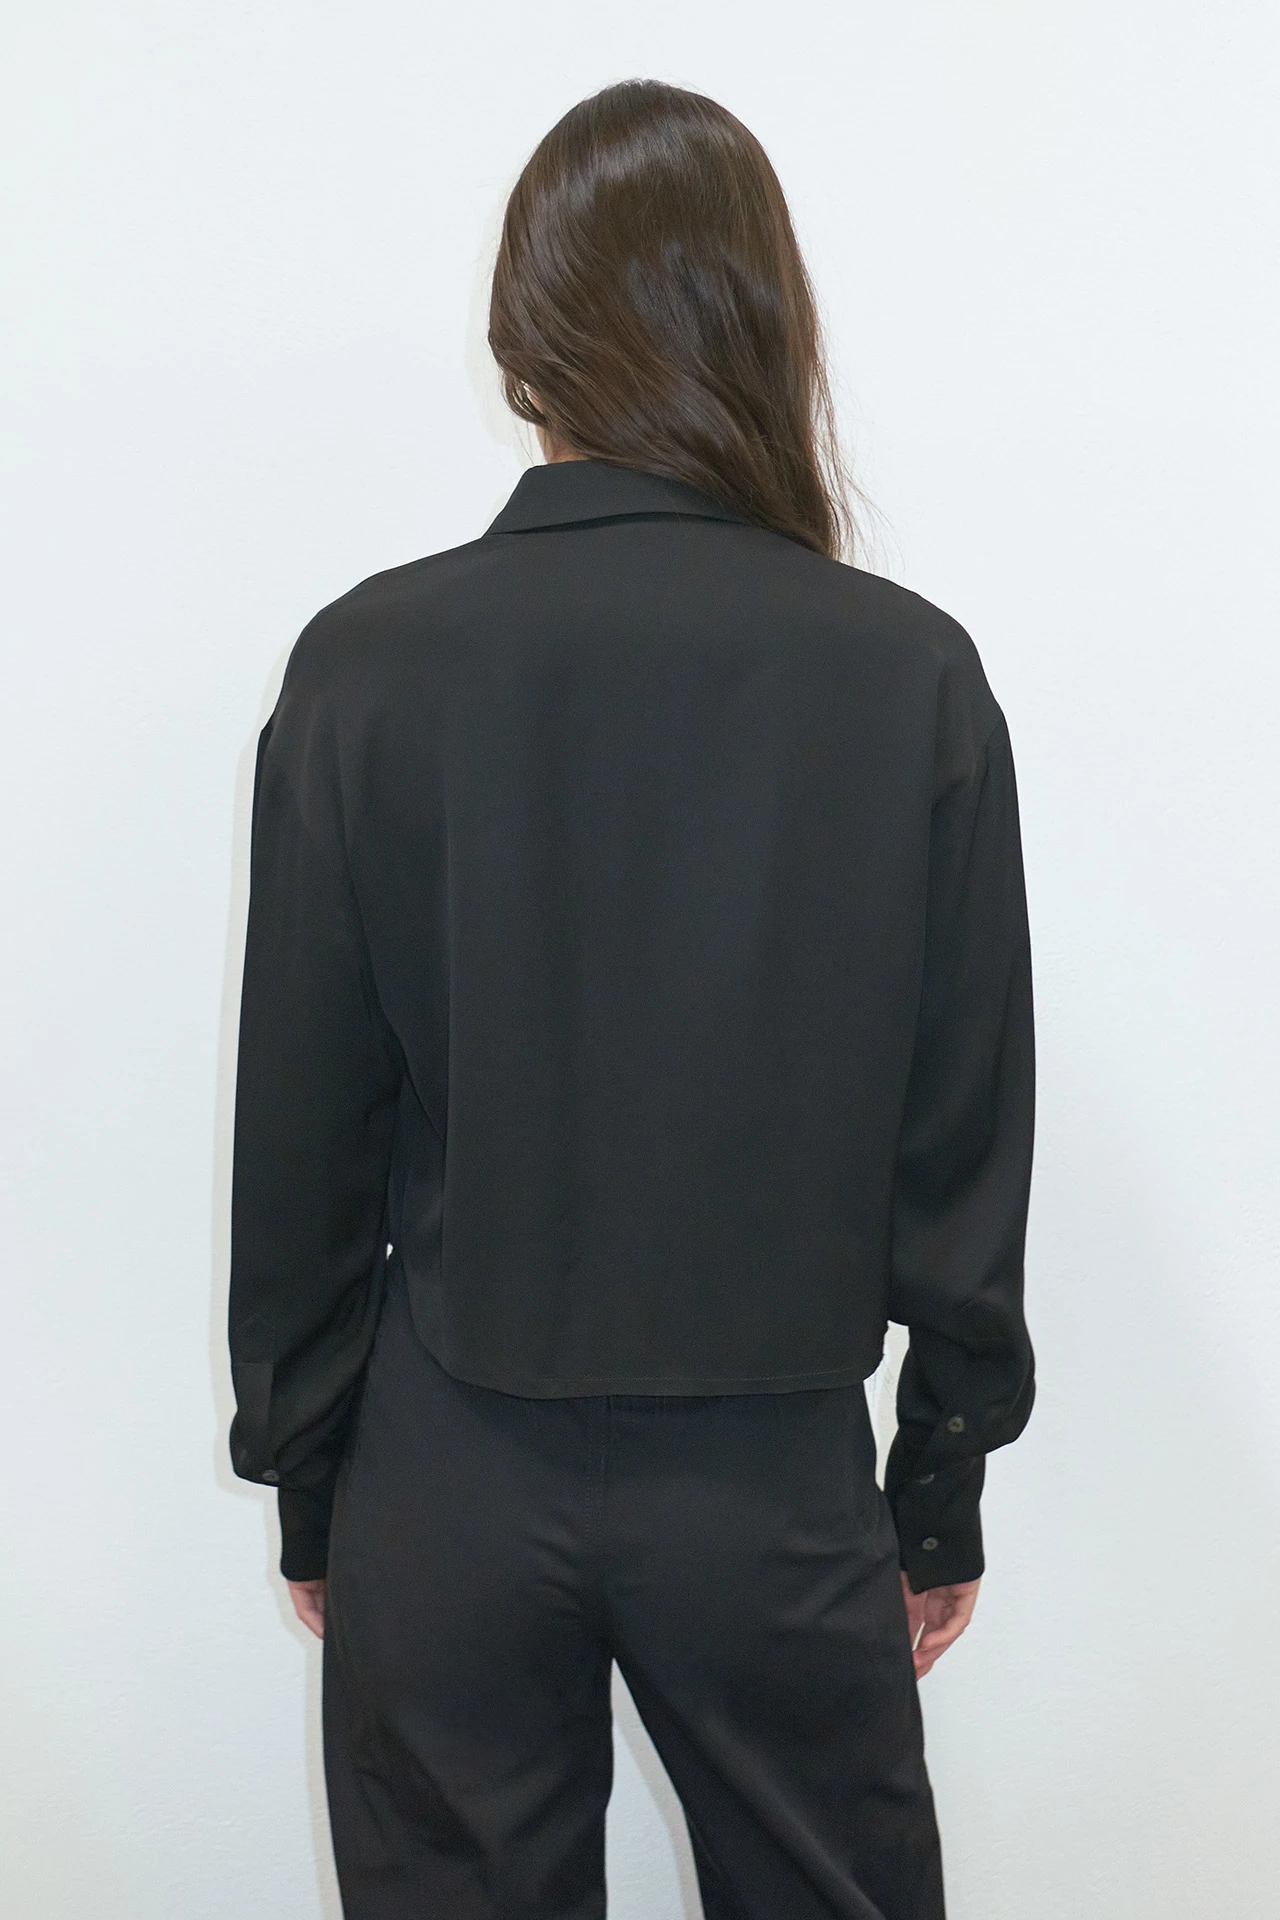 EC-miista-marques-black-shirt-abai-black-trousers-06